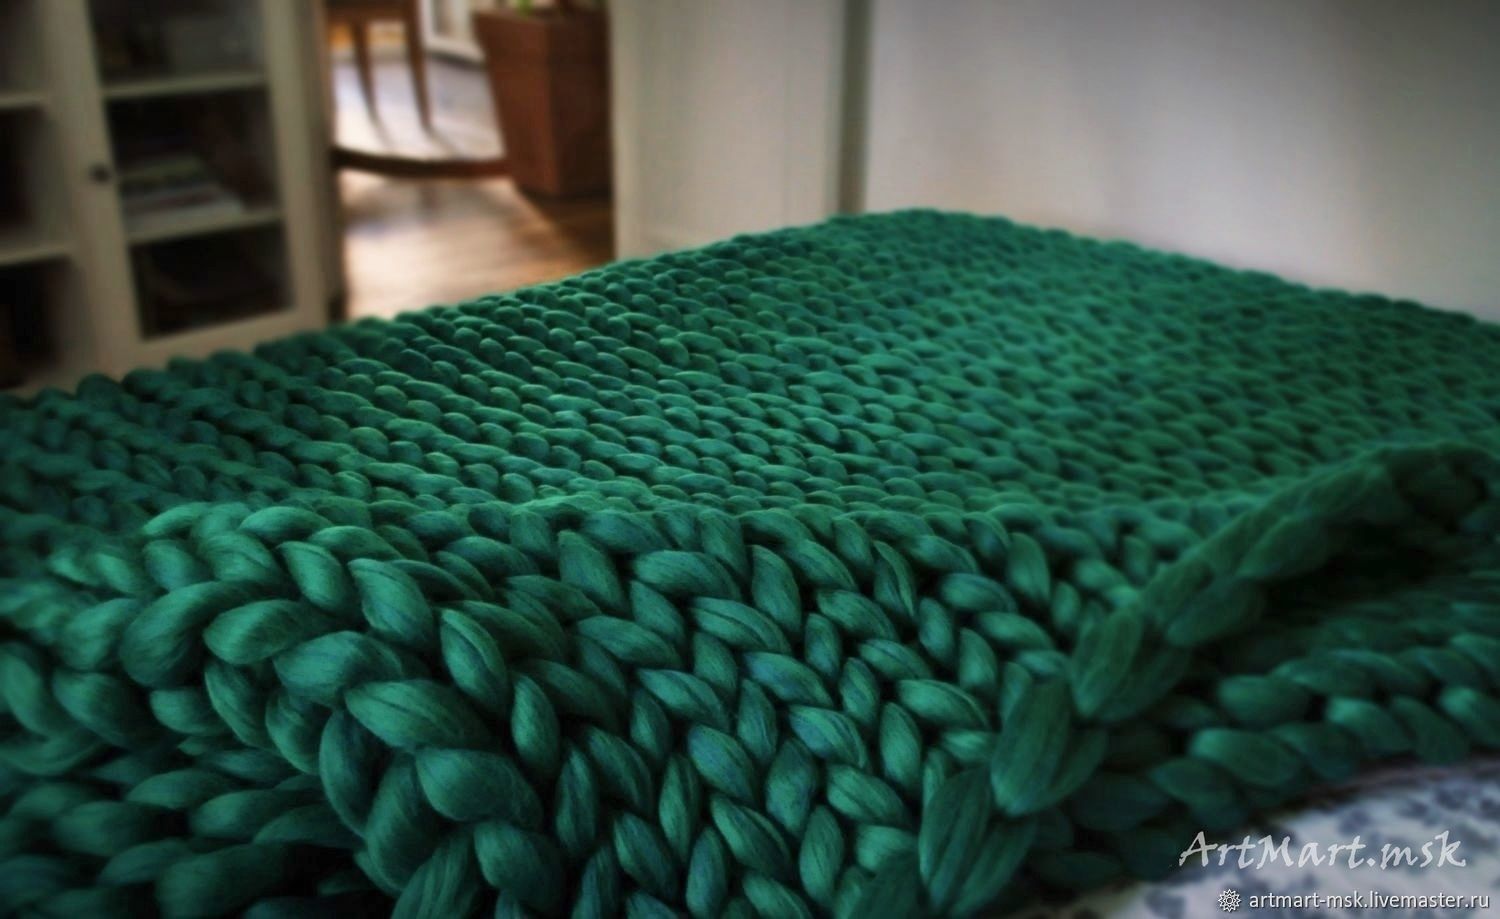 Arm knit blanket merino wool 40x60inc (101x152cm)